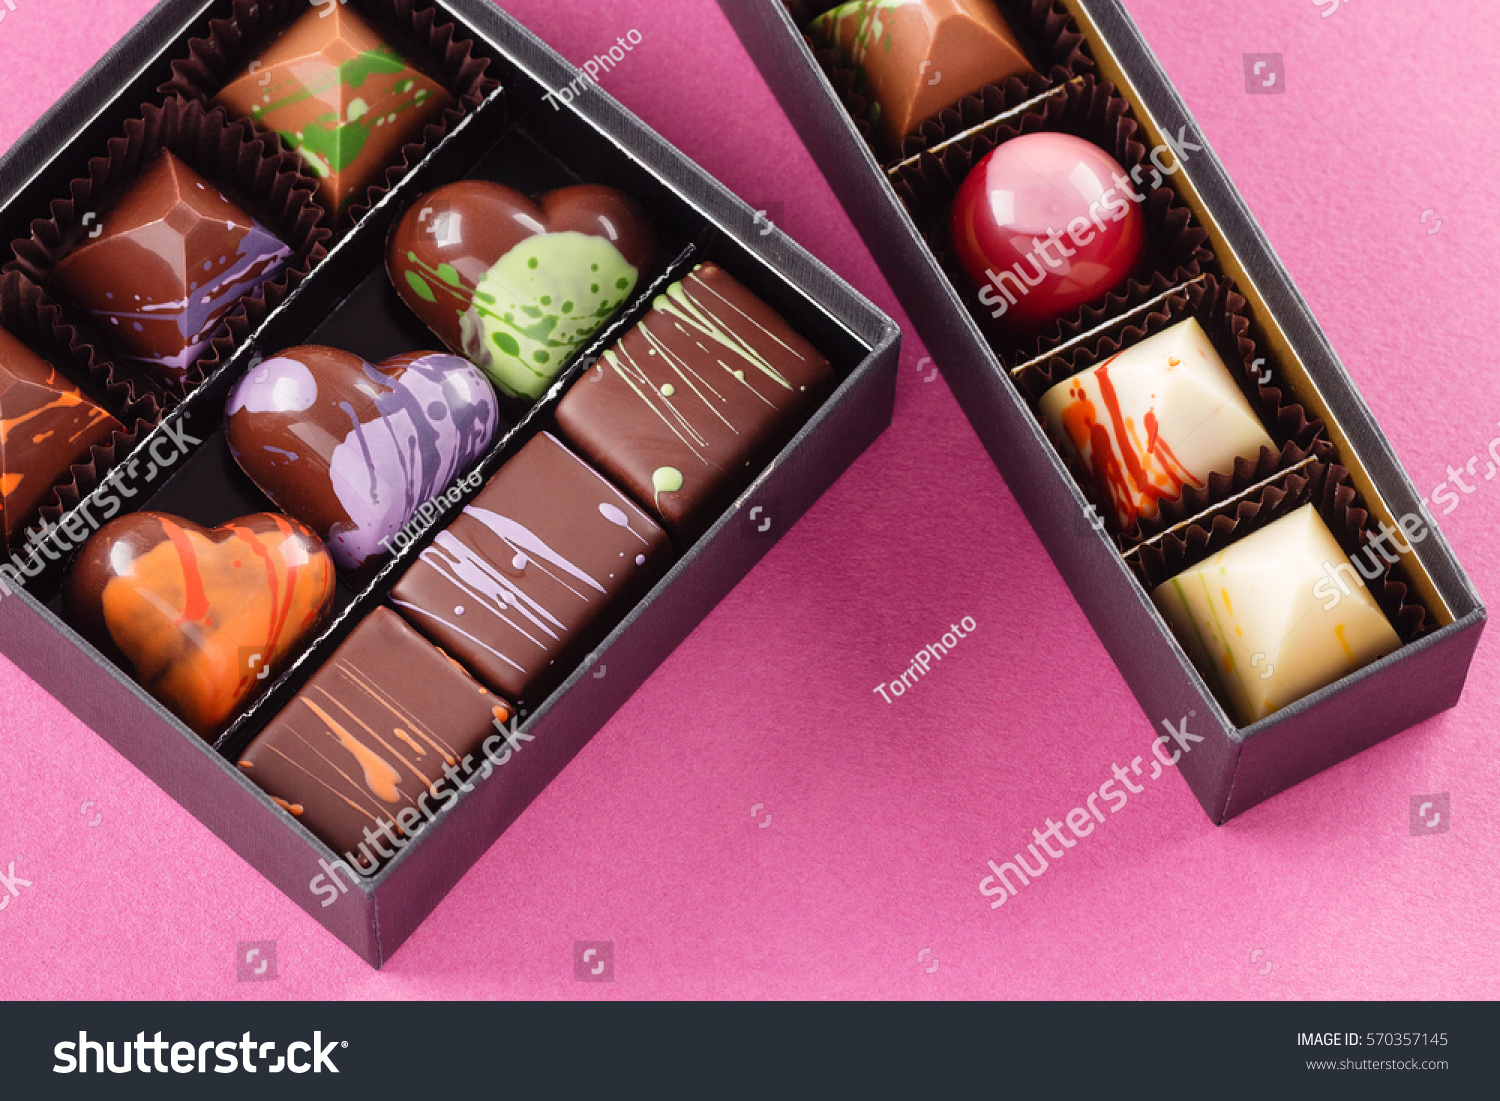 https://www.shutterstock.com/image-photo/set-colorful-handmade-luxury-chocolate-bonbons-570357145